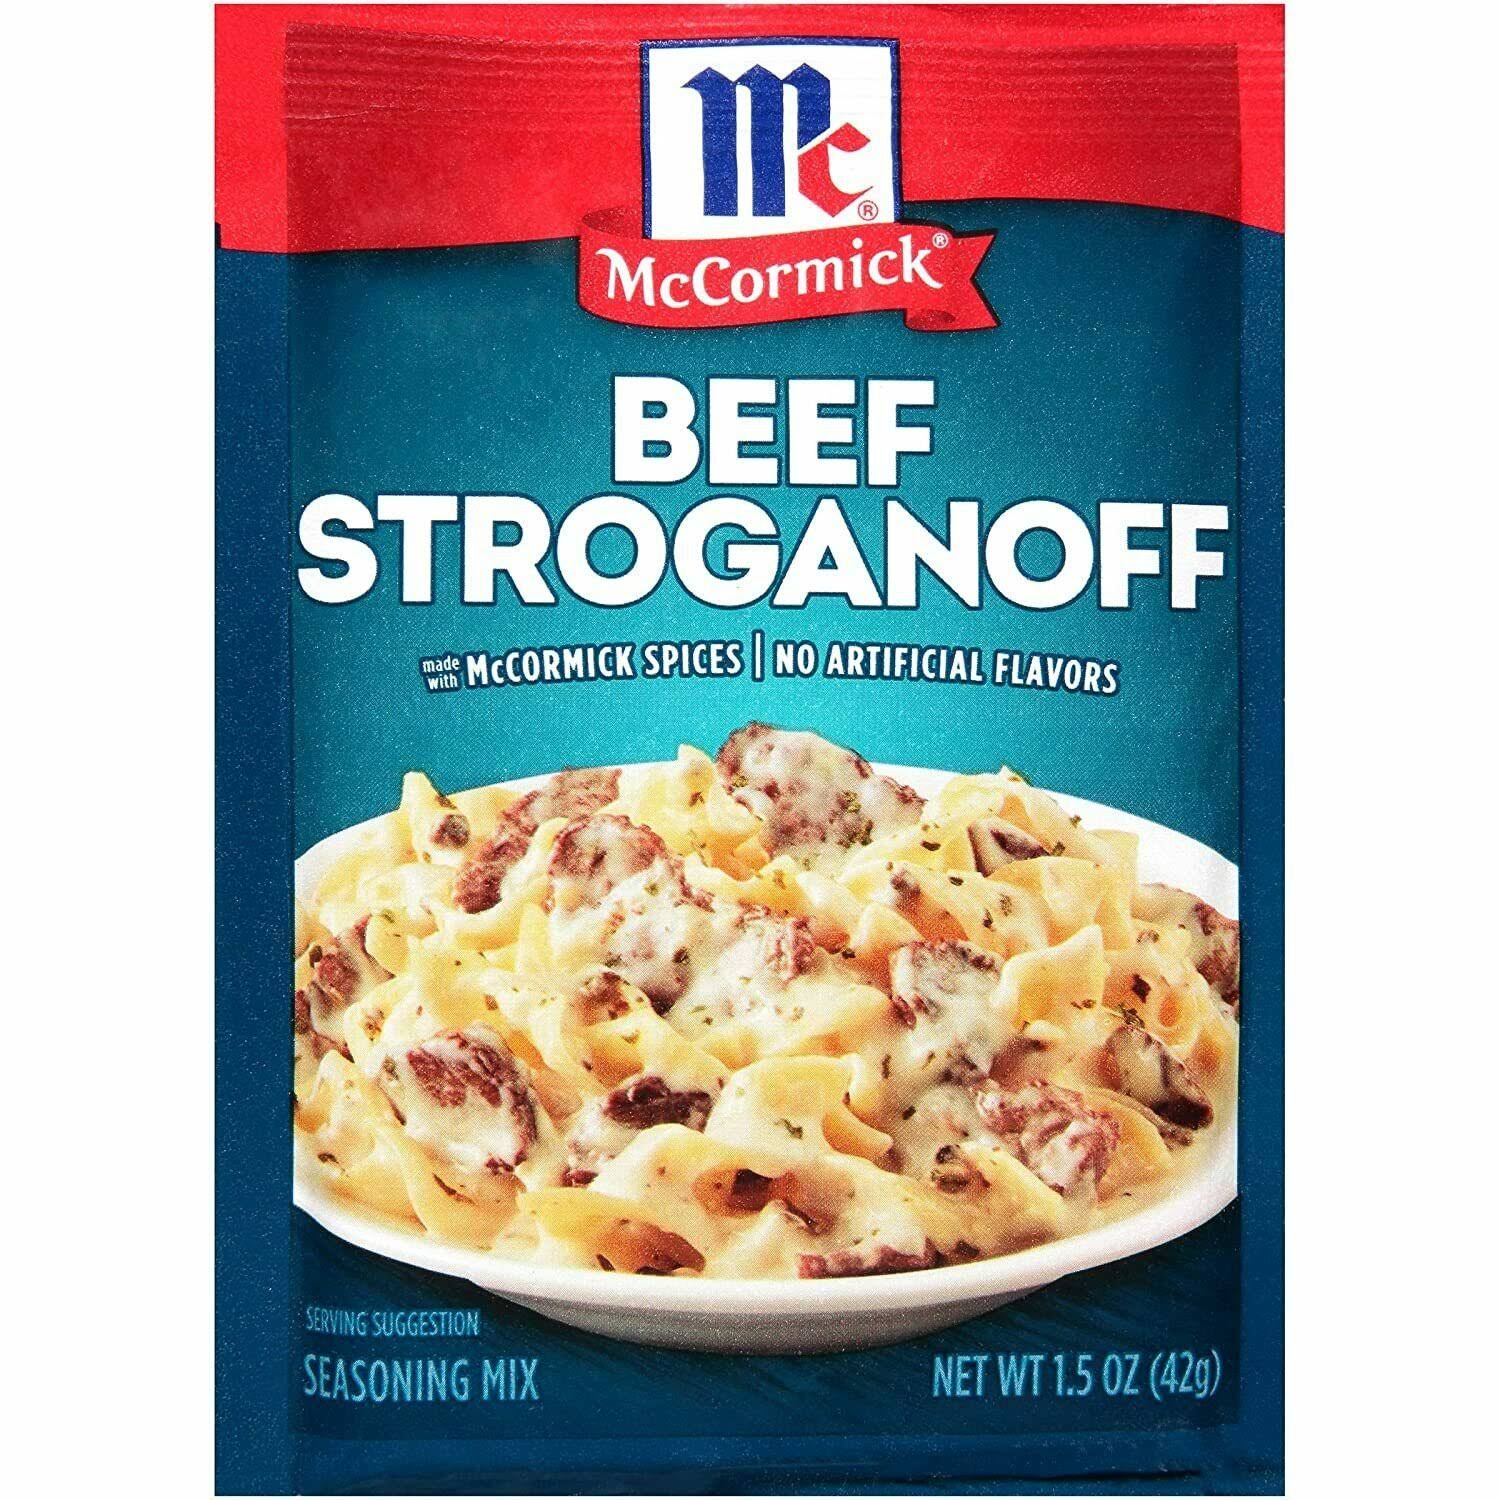 McCormick Beef Stroganoff Sauce Mix - 42g